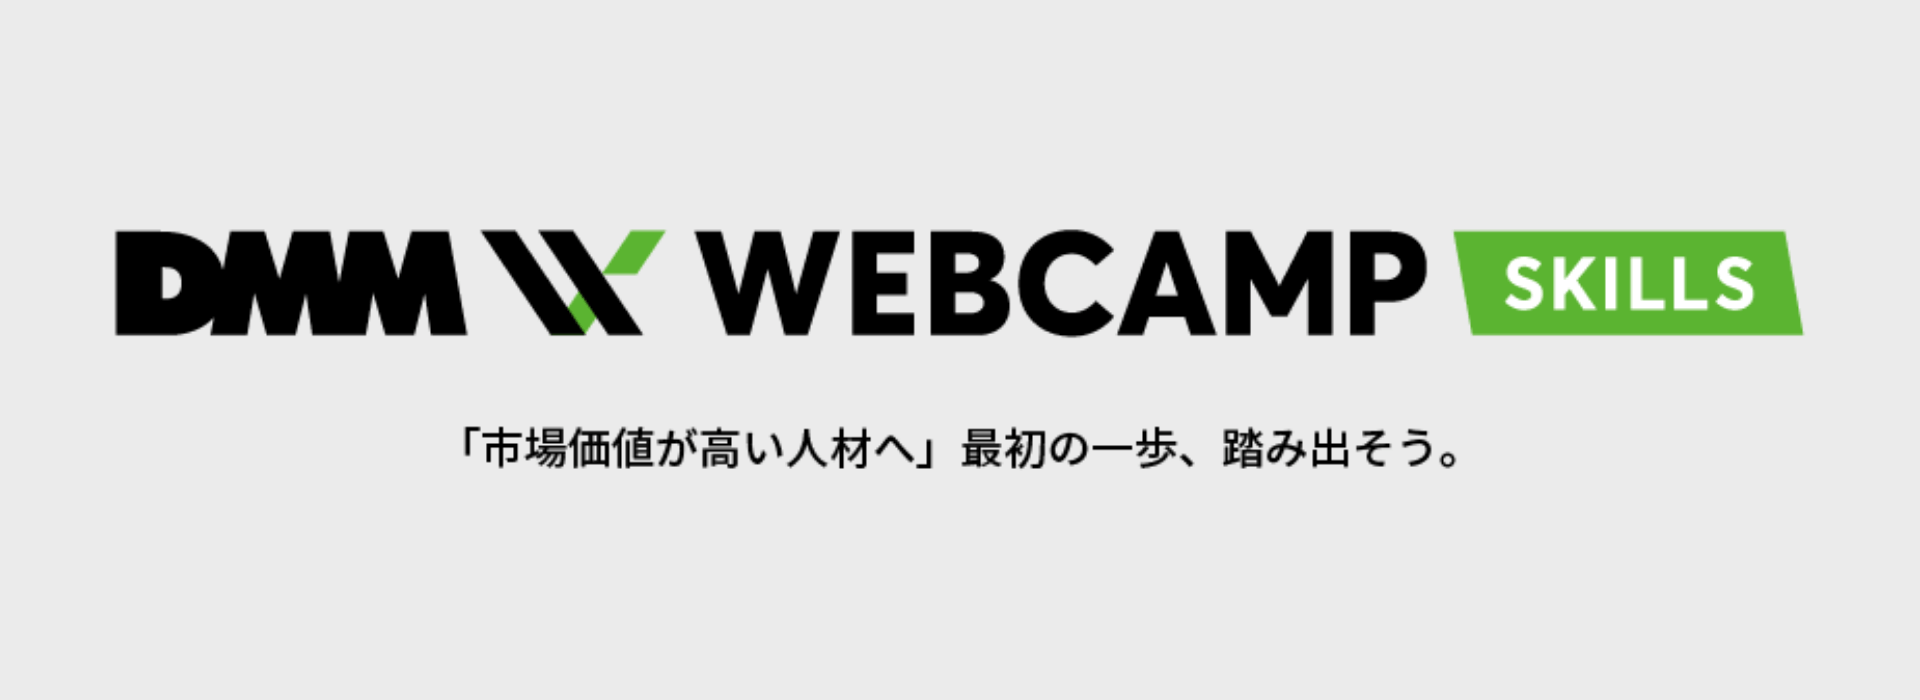 dmm webcamp skillsのロゴ